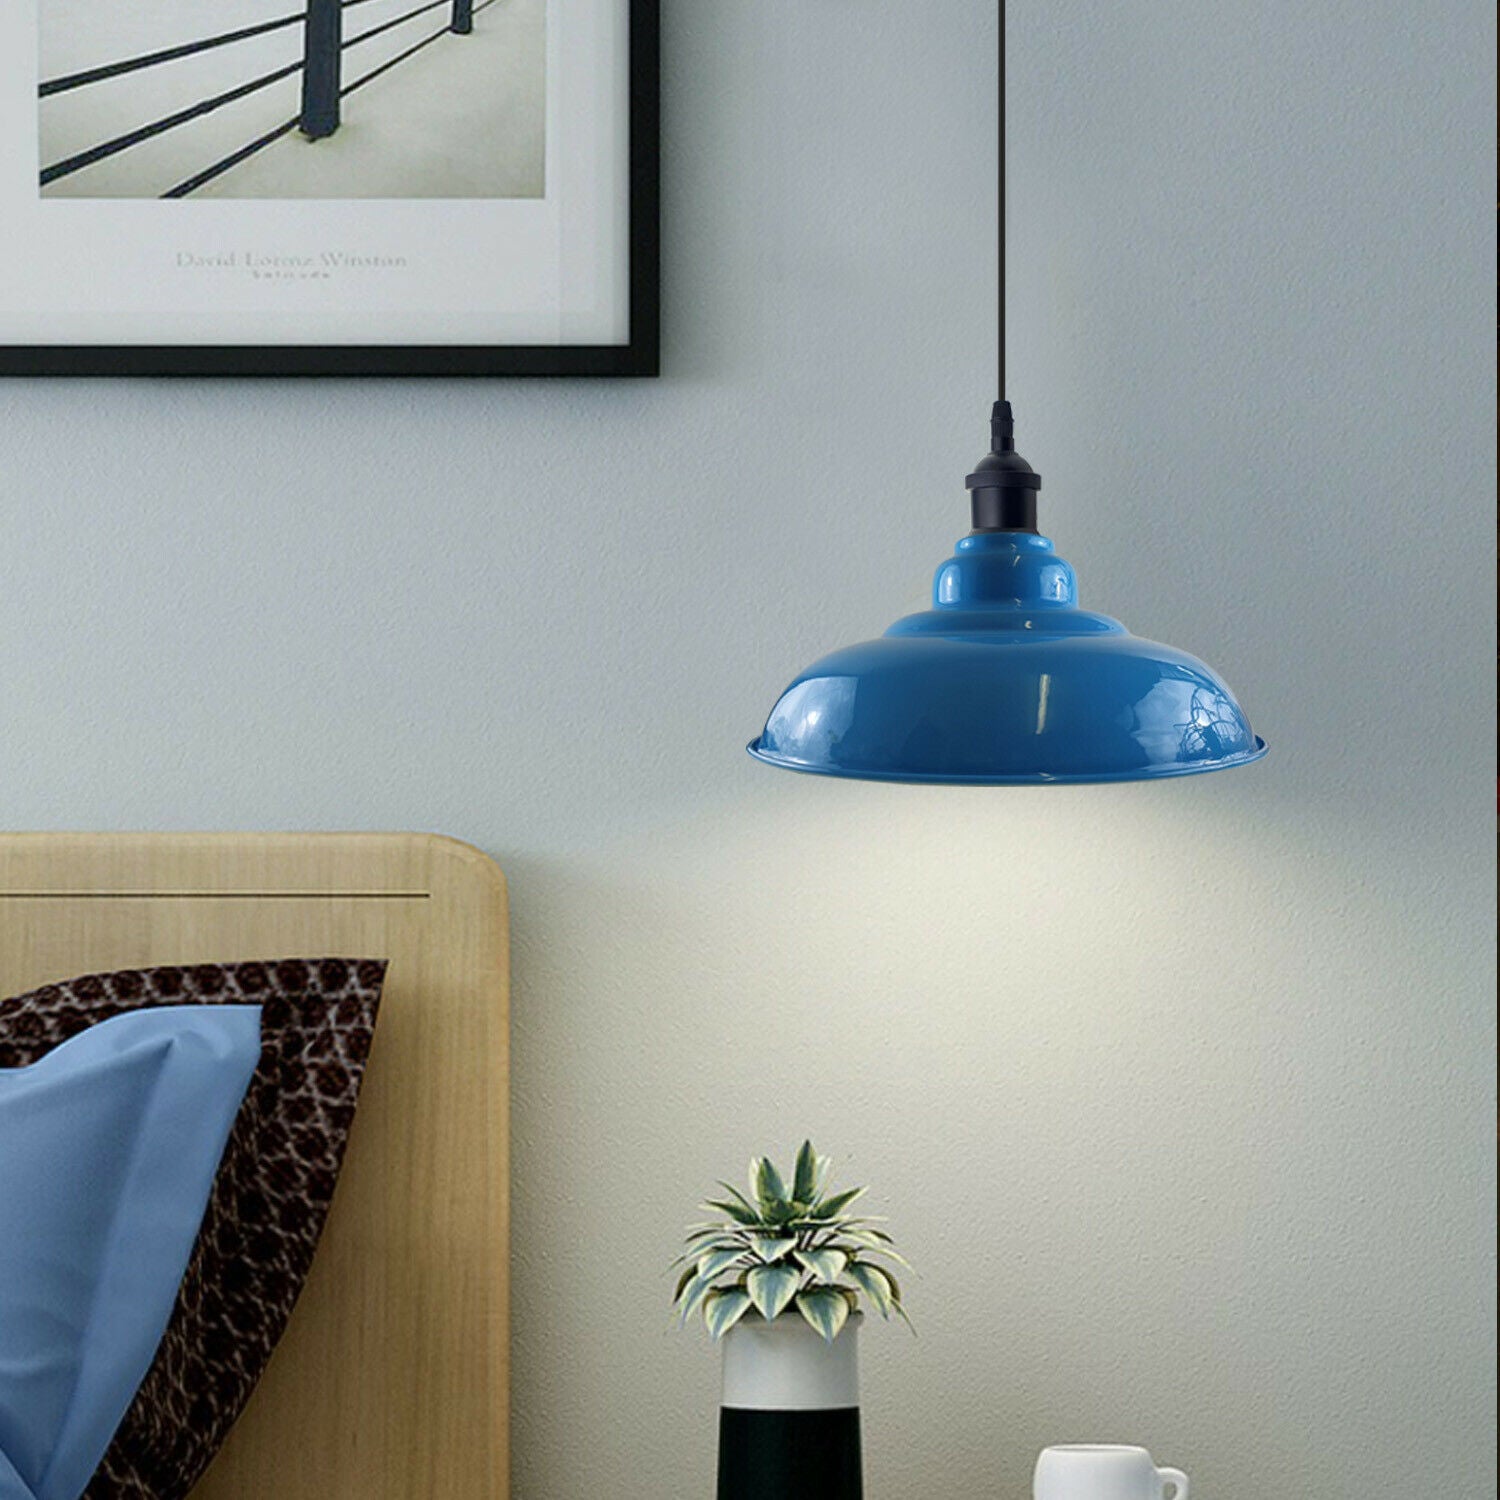 LEDSone industrial Vintage  32cm  Light Blue Pendant Retro Metal Lamp Shade E27 Uk Holder~3689 - LEDSone UK Ltd